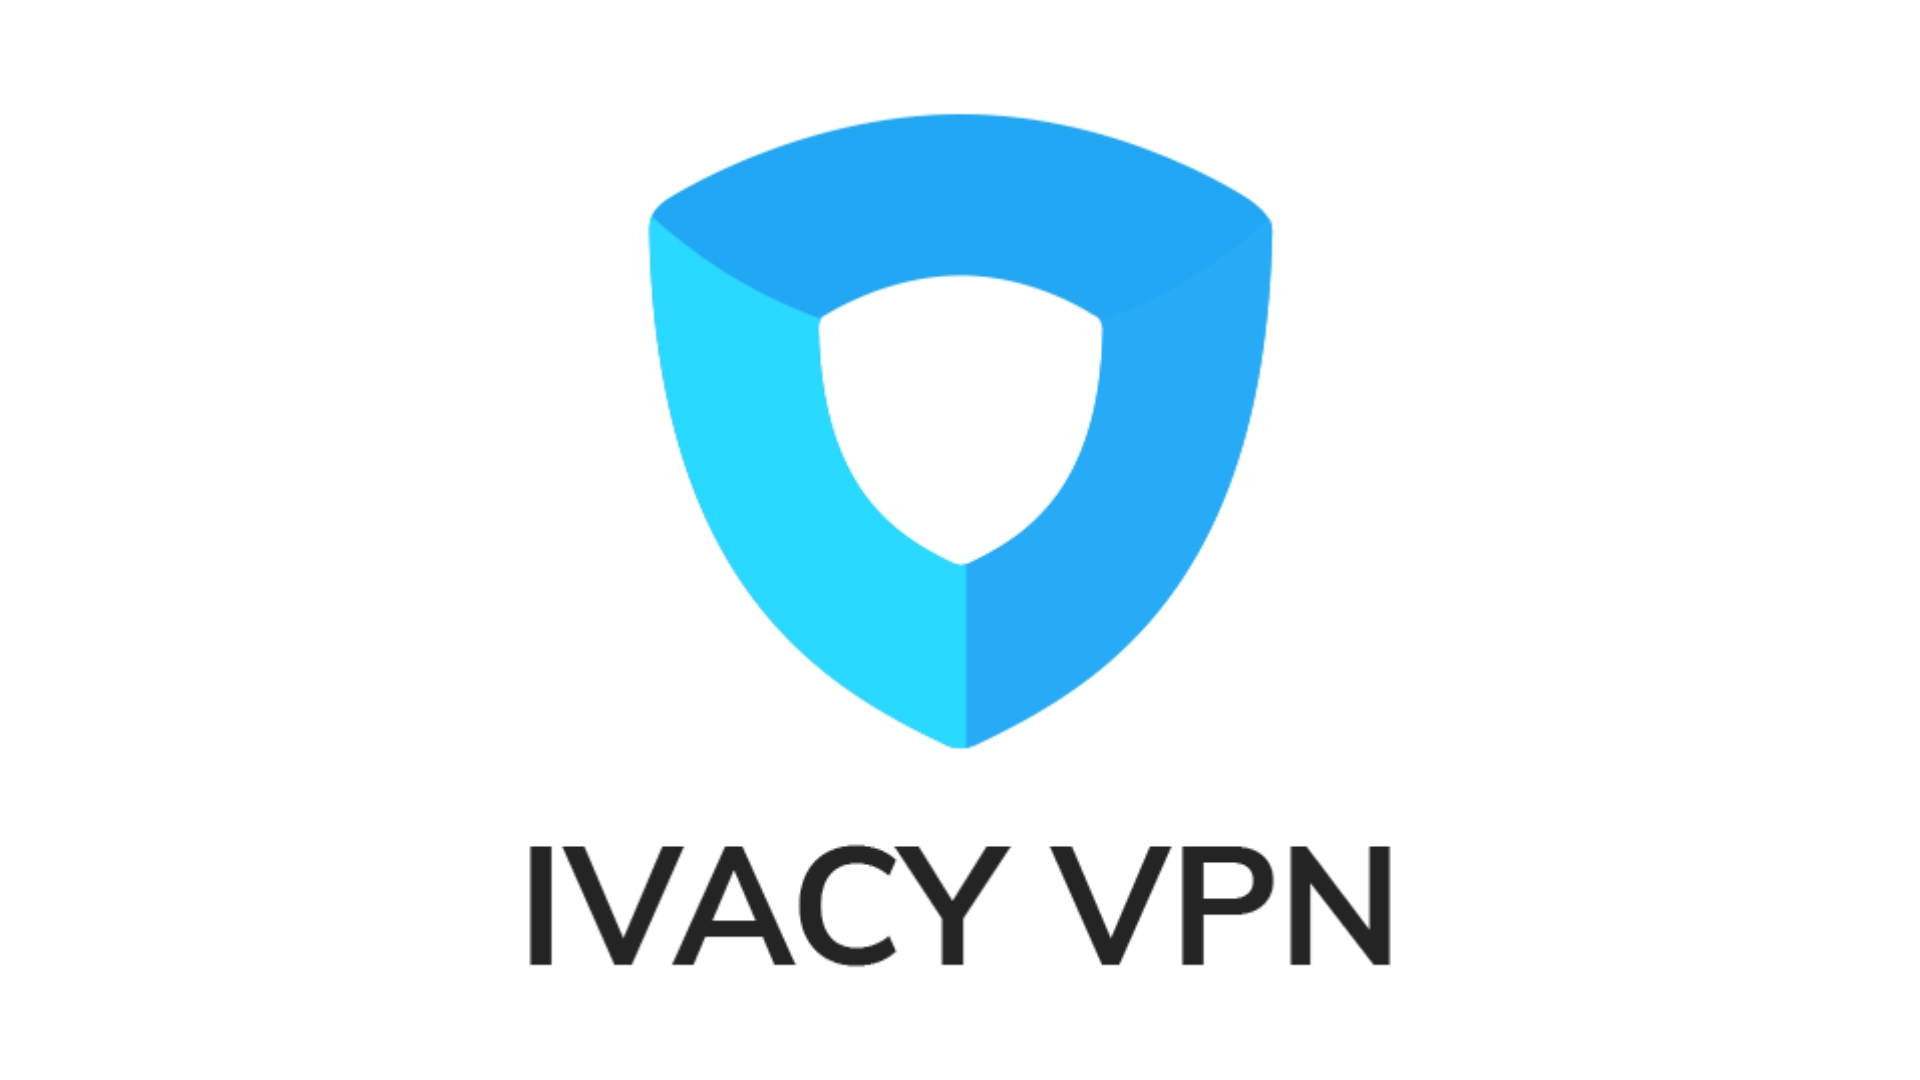 Best Firefox VPN: Ivacy VPN. Image shows the company logo.